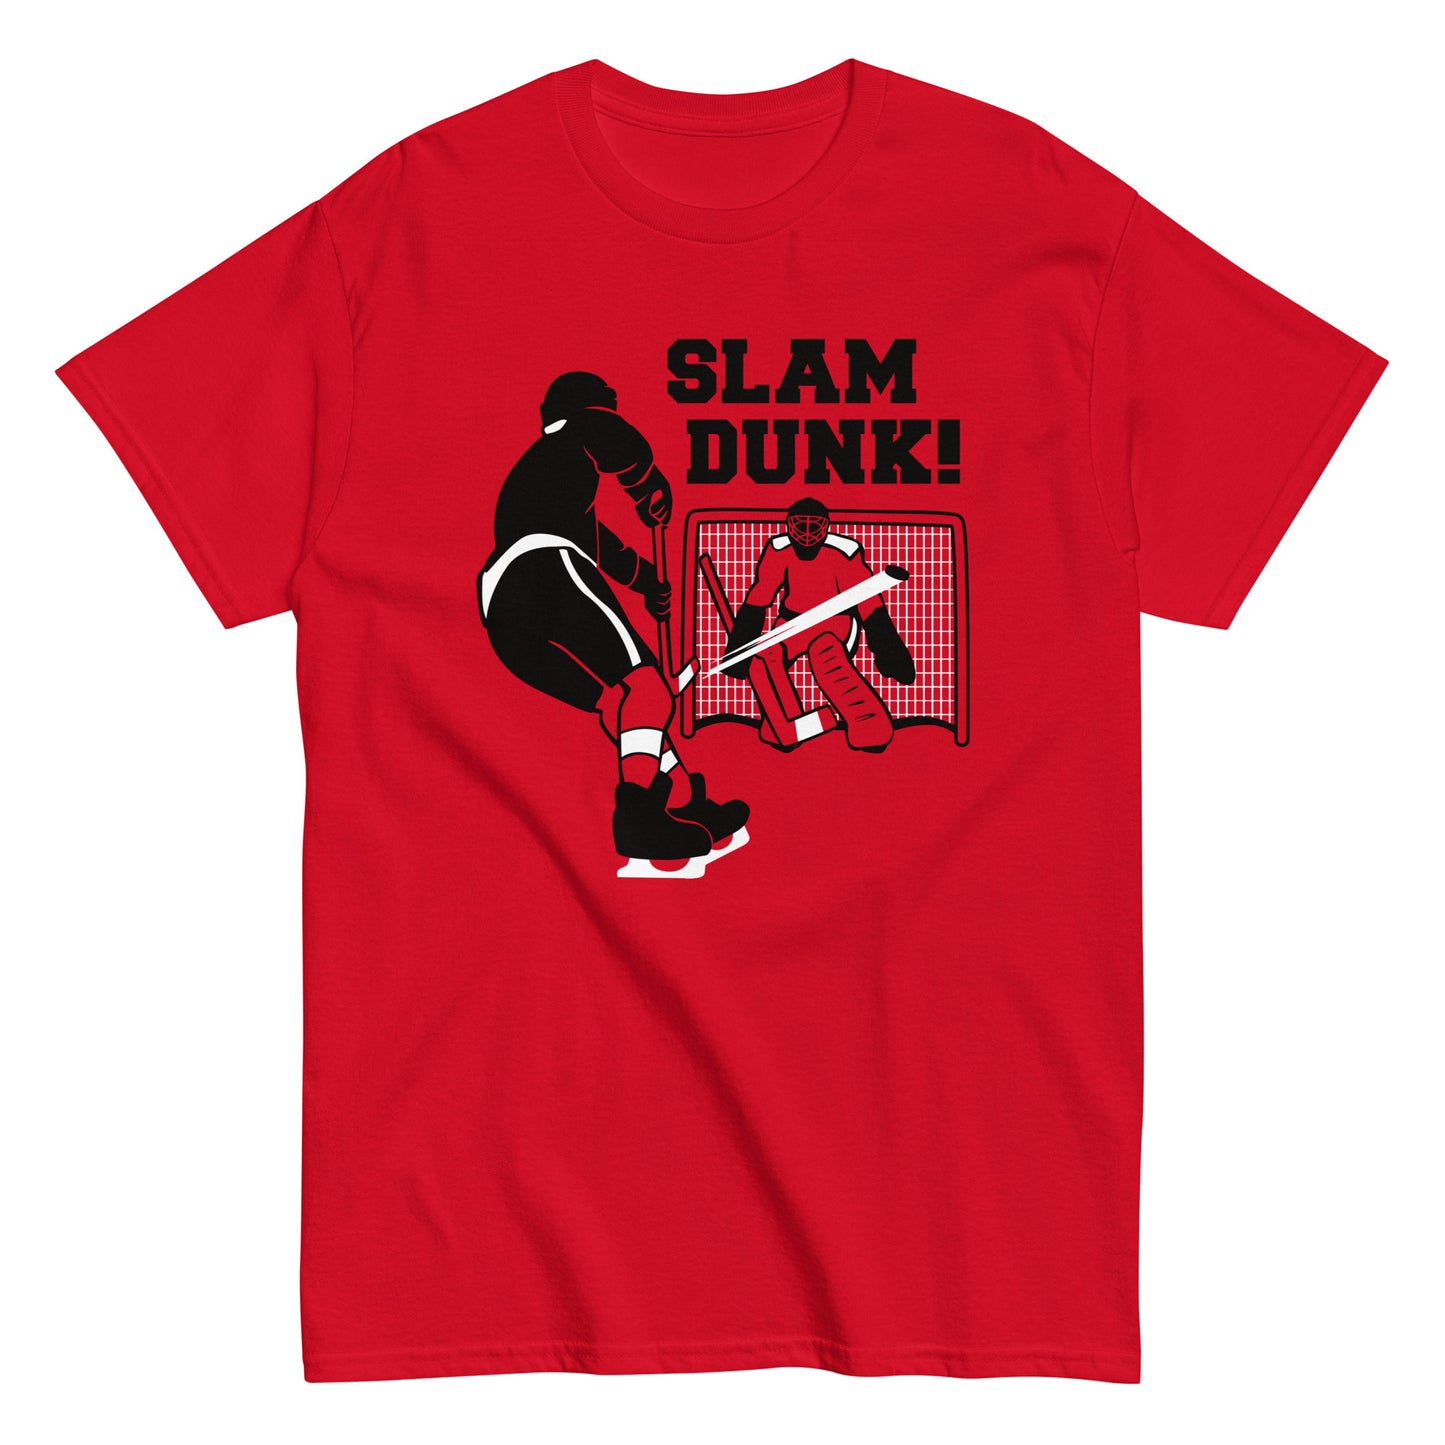 Slam Dunk! Men's Classic Tee